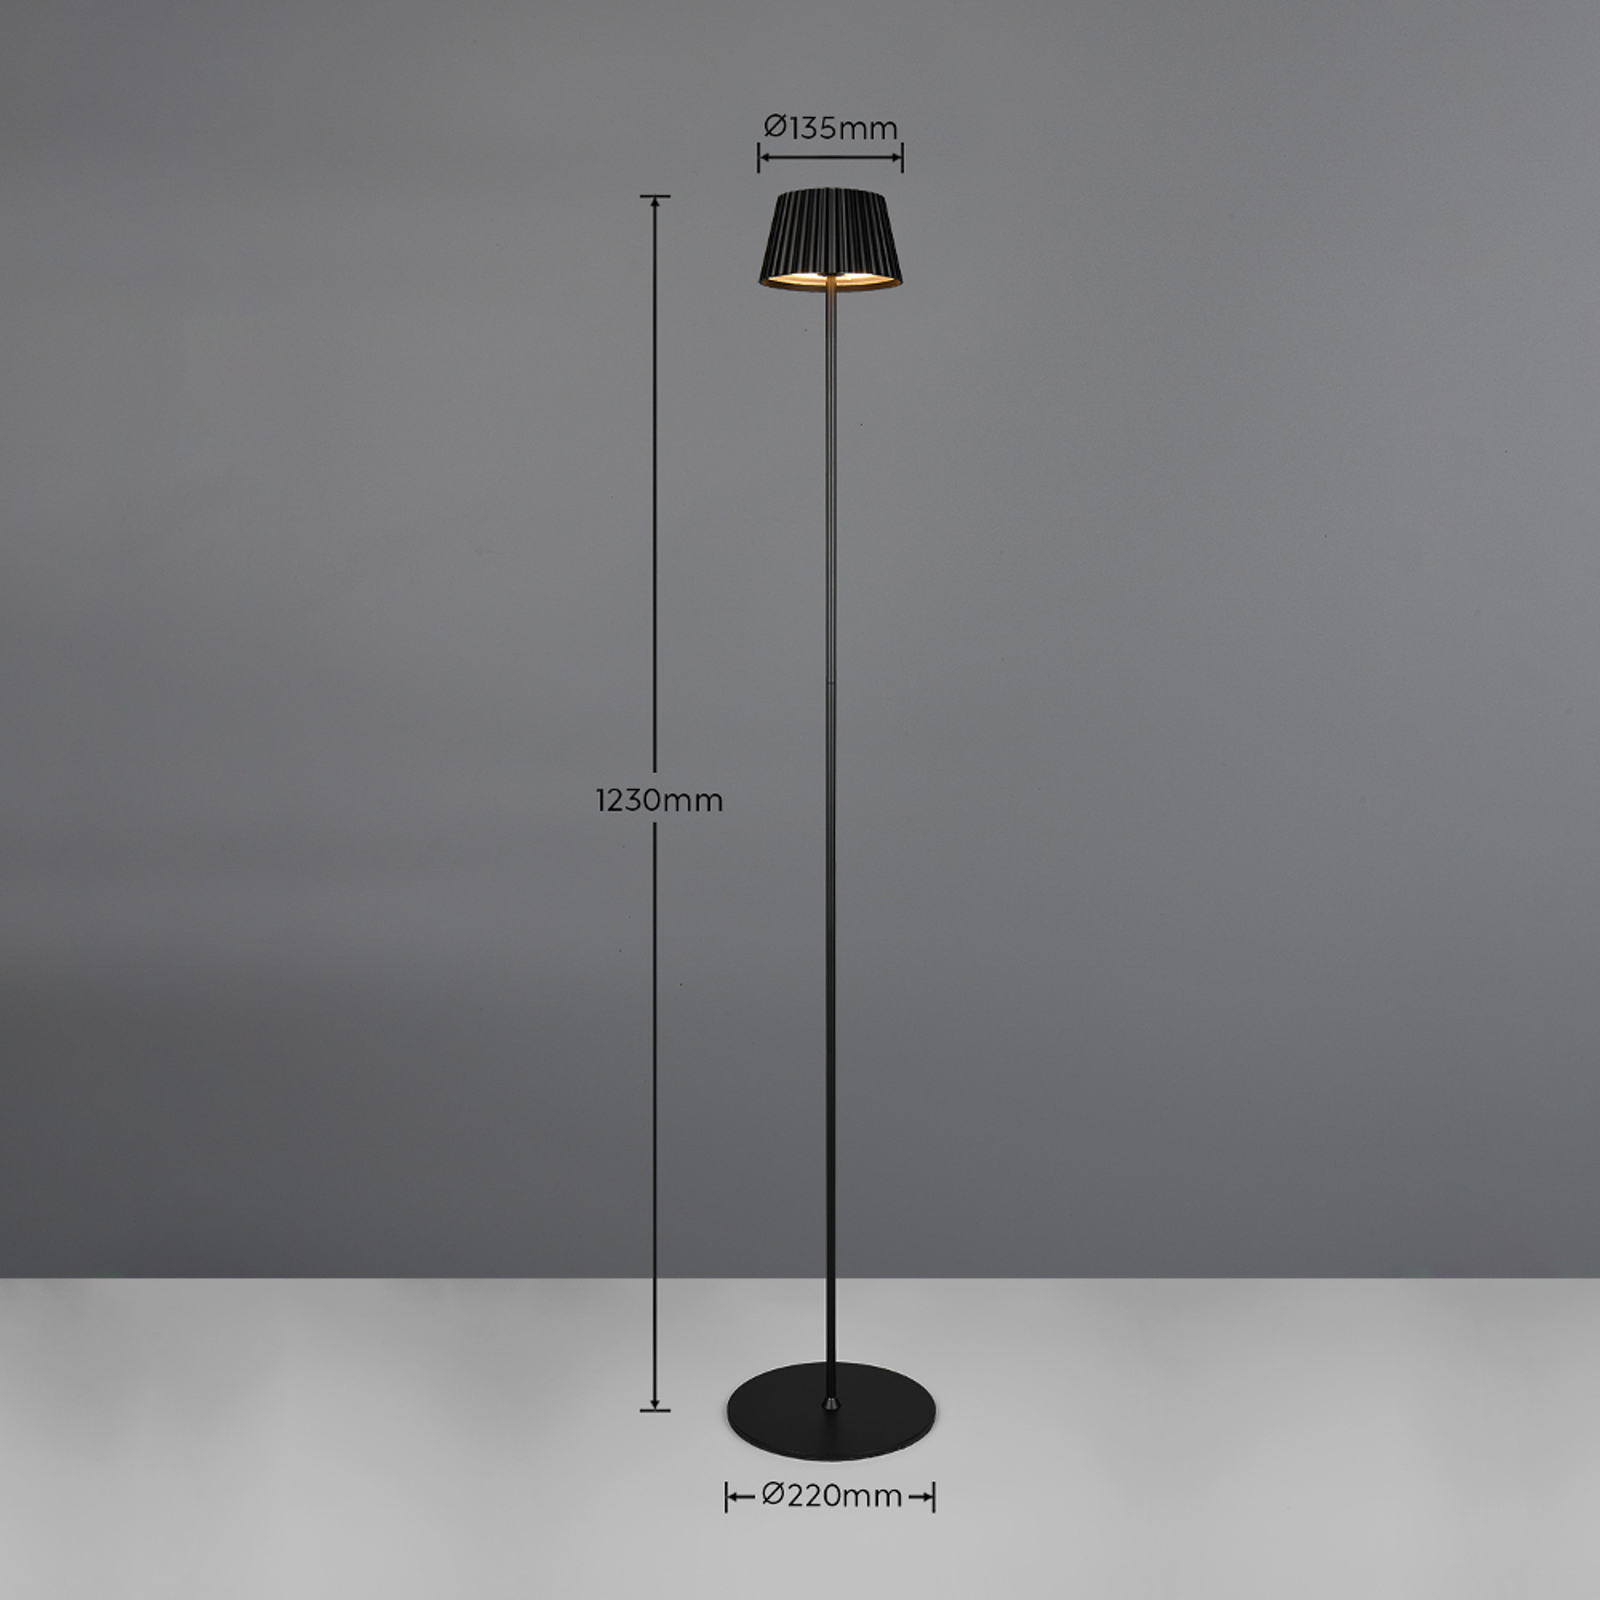 Suarez ladattava LED-lattiavalaisin, musta, korkeus 123 cm, metallia